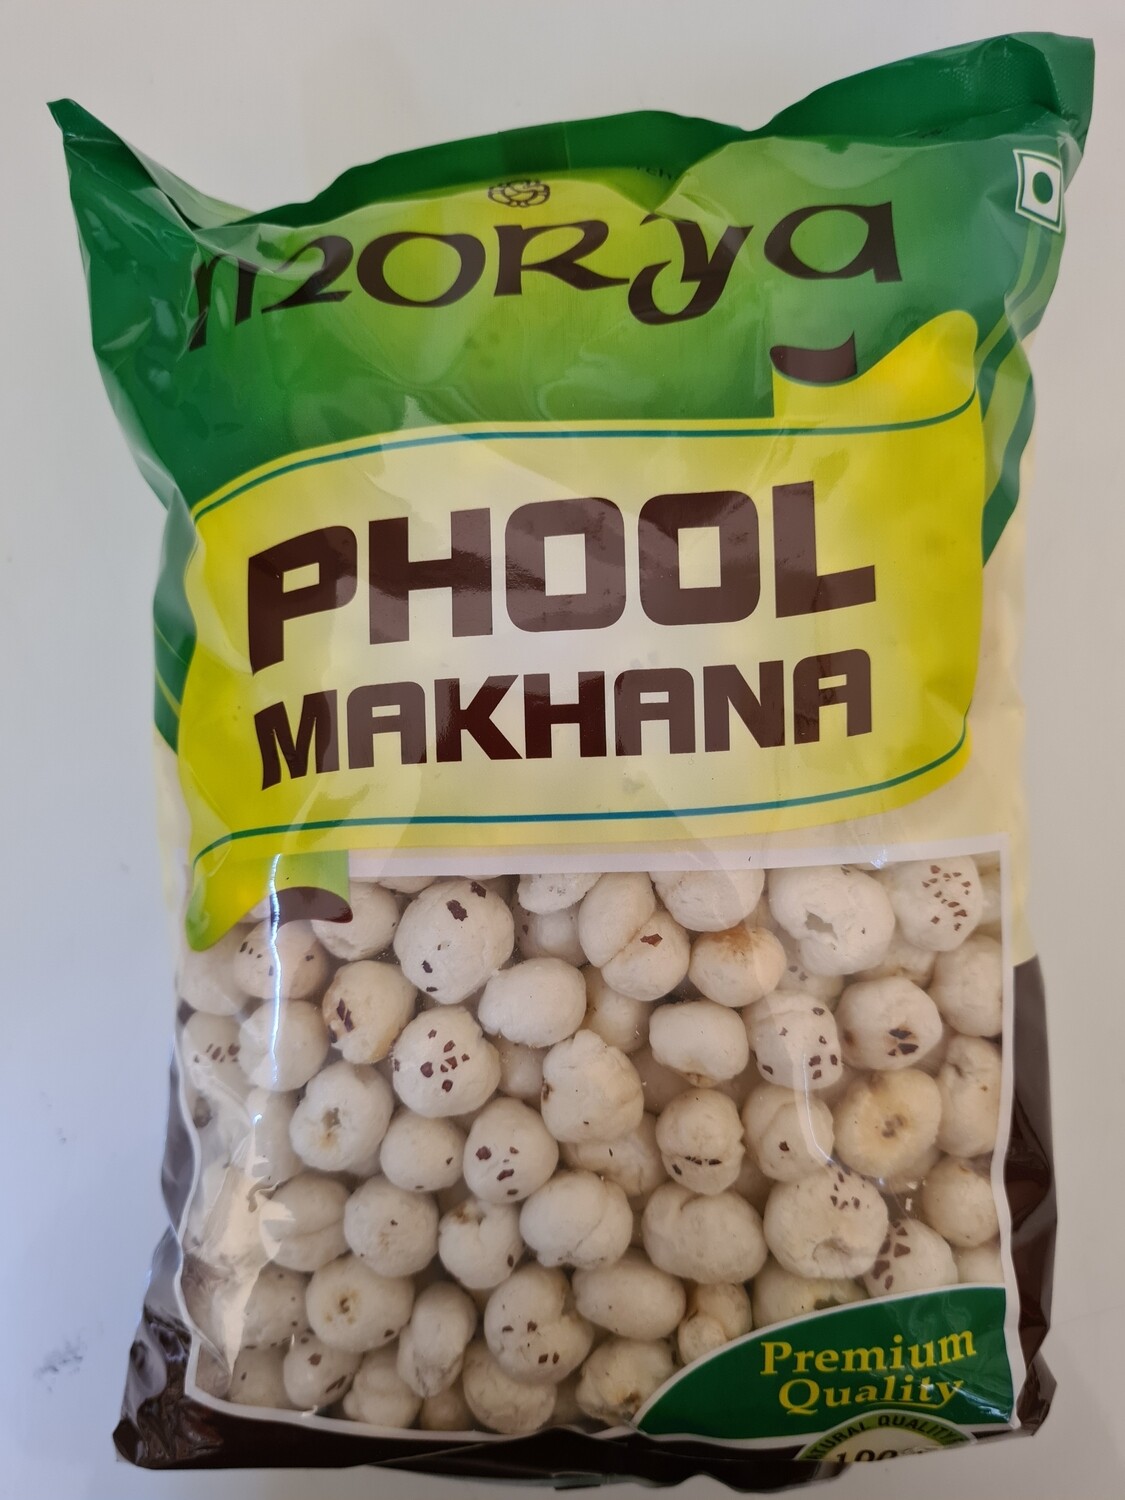 Morya Phool Makhana (Big)